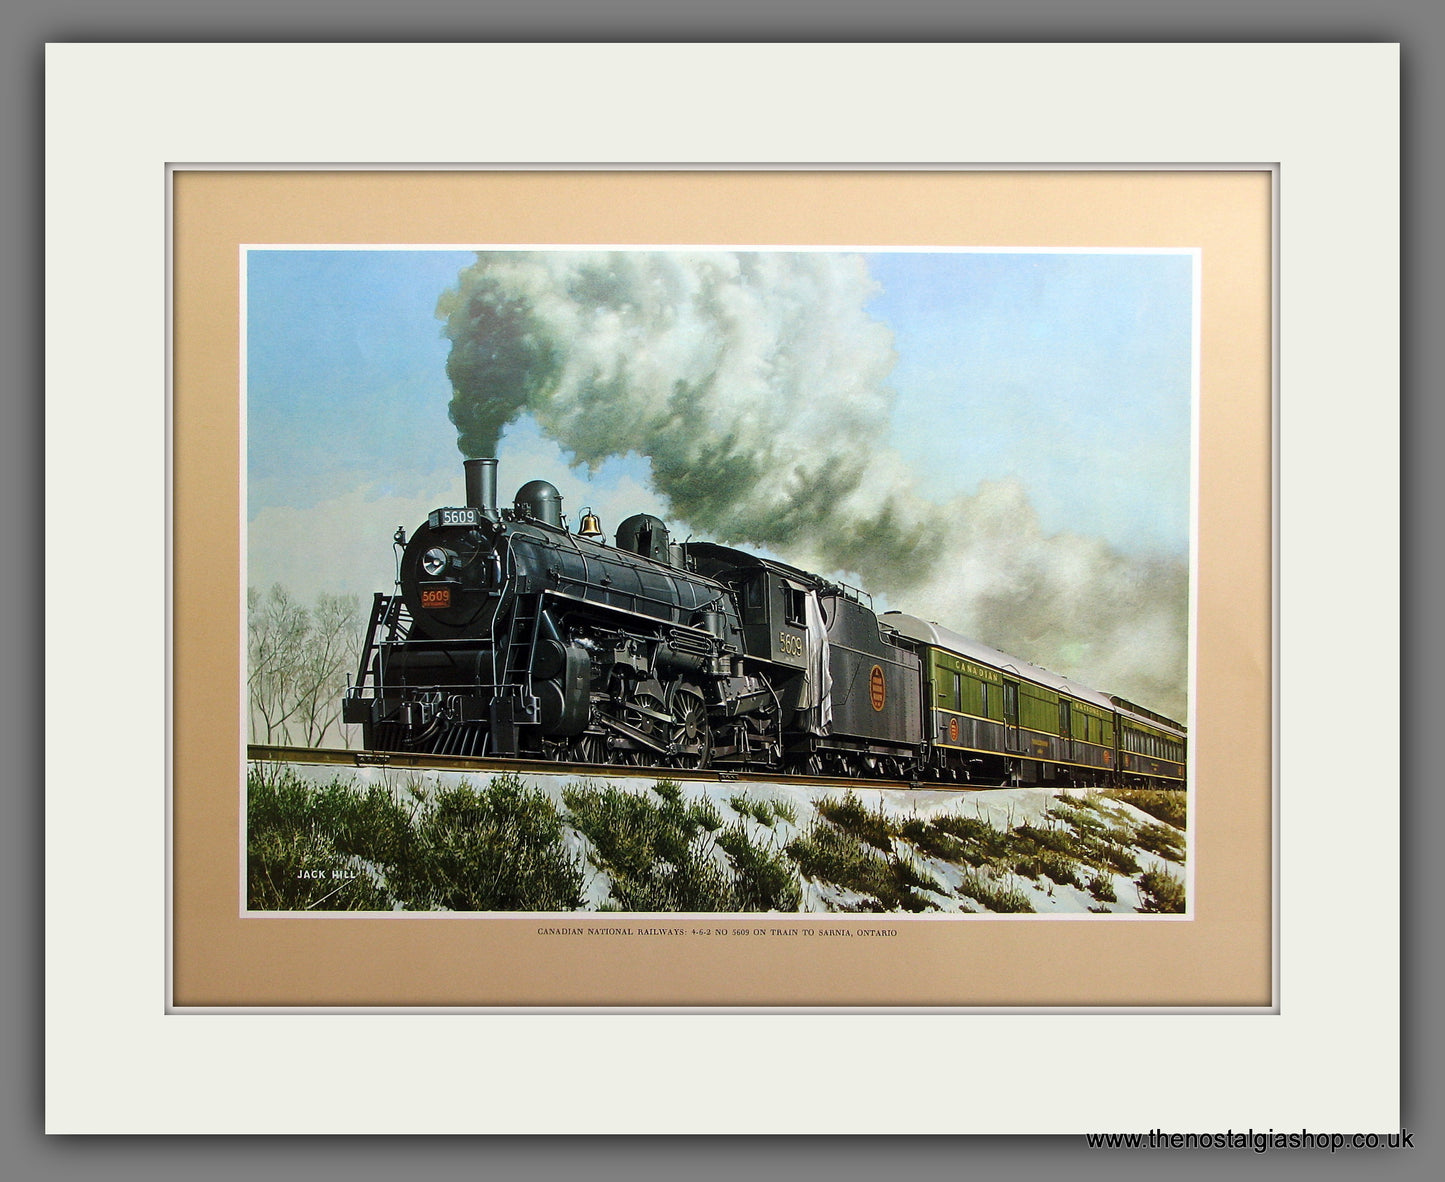 Canada National Railways. No.5609, Sarnia, Ontario. Mounted Railway Print.